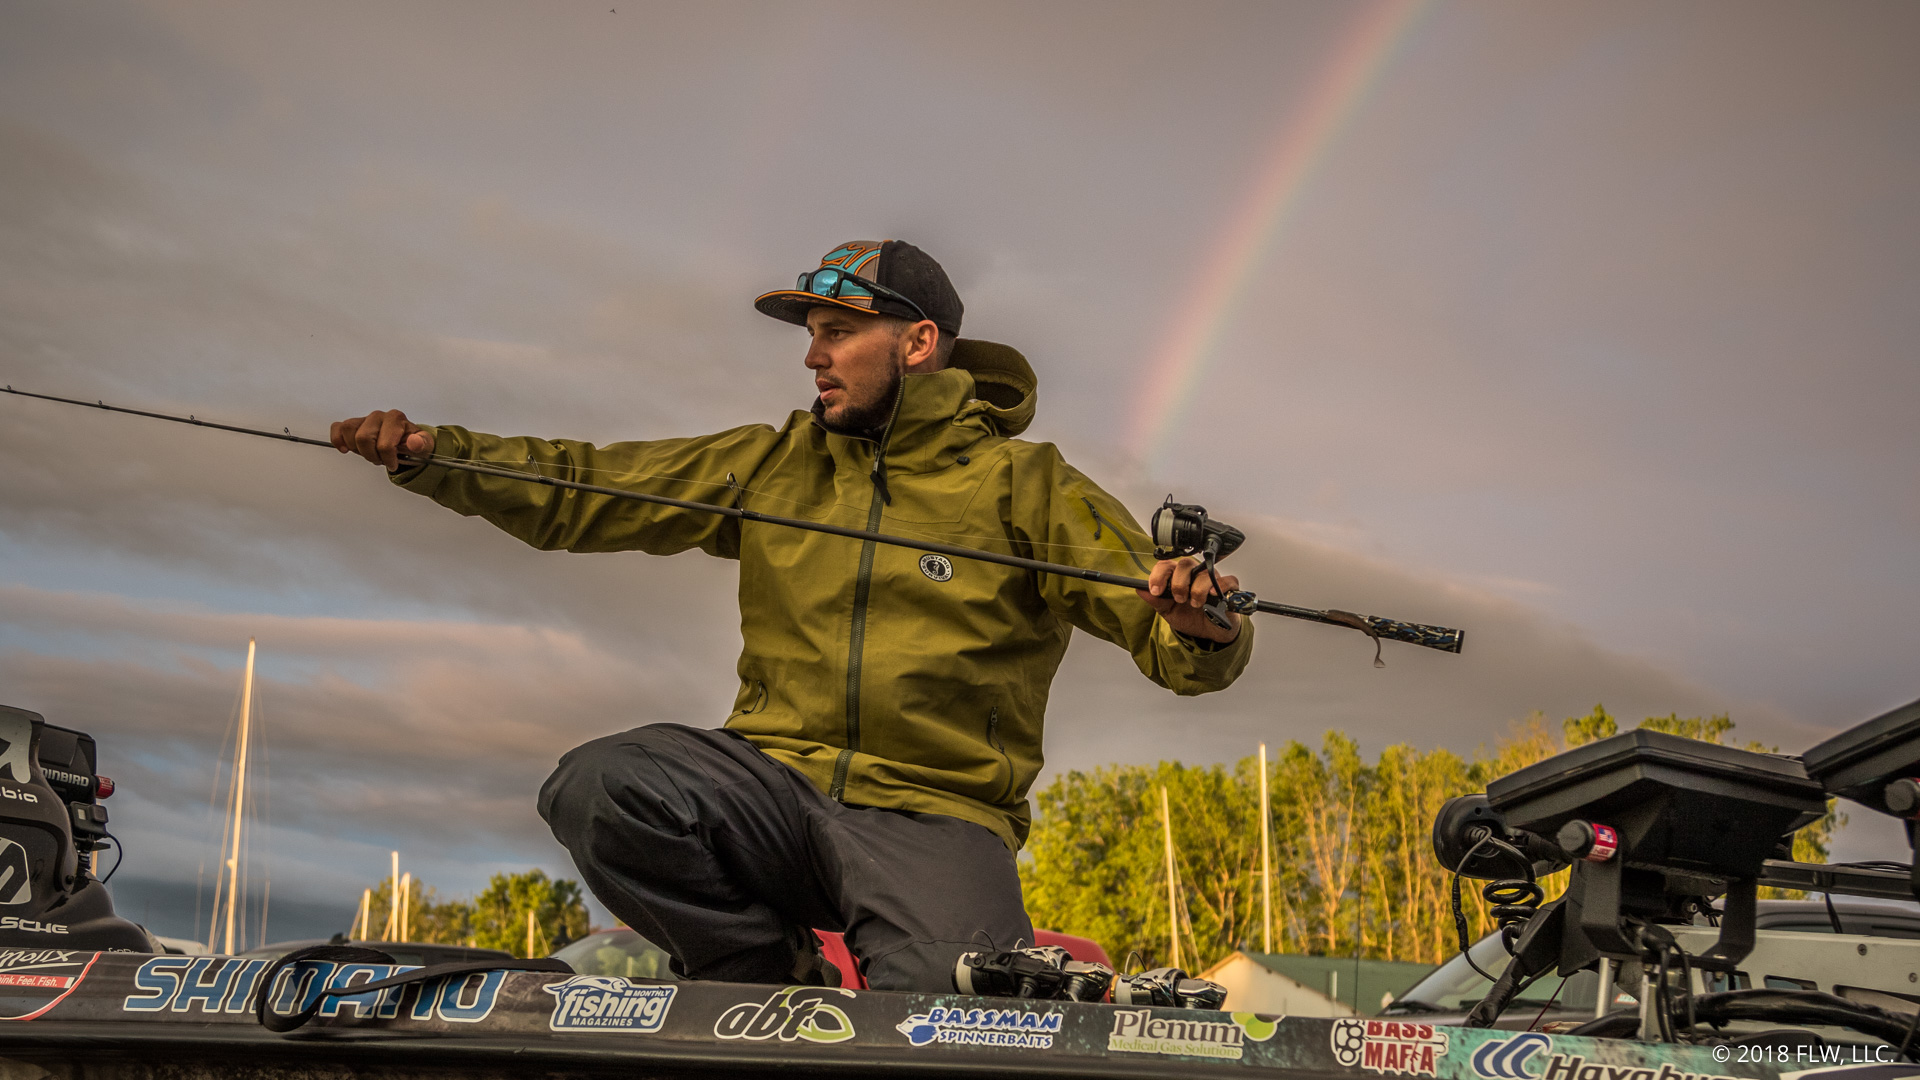 Fishing for a Championship - Major League Fishing